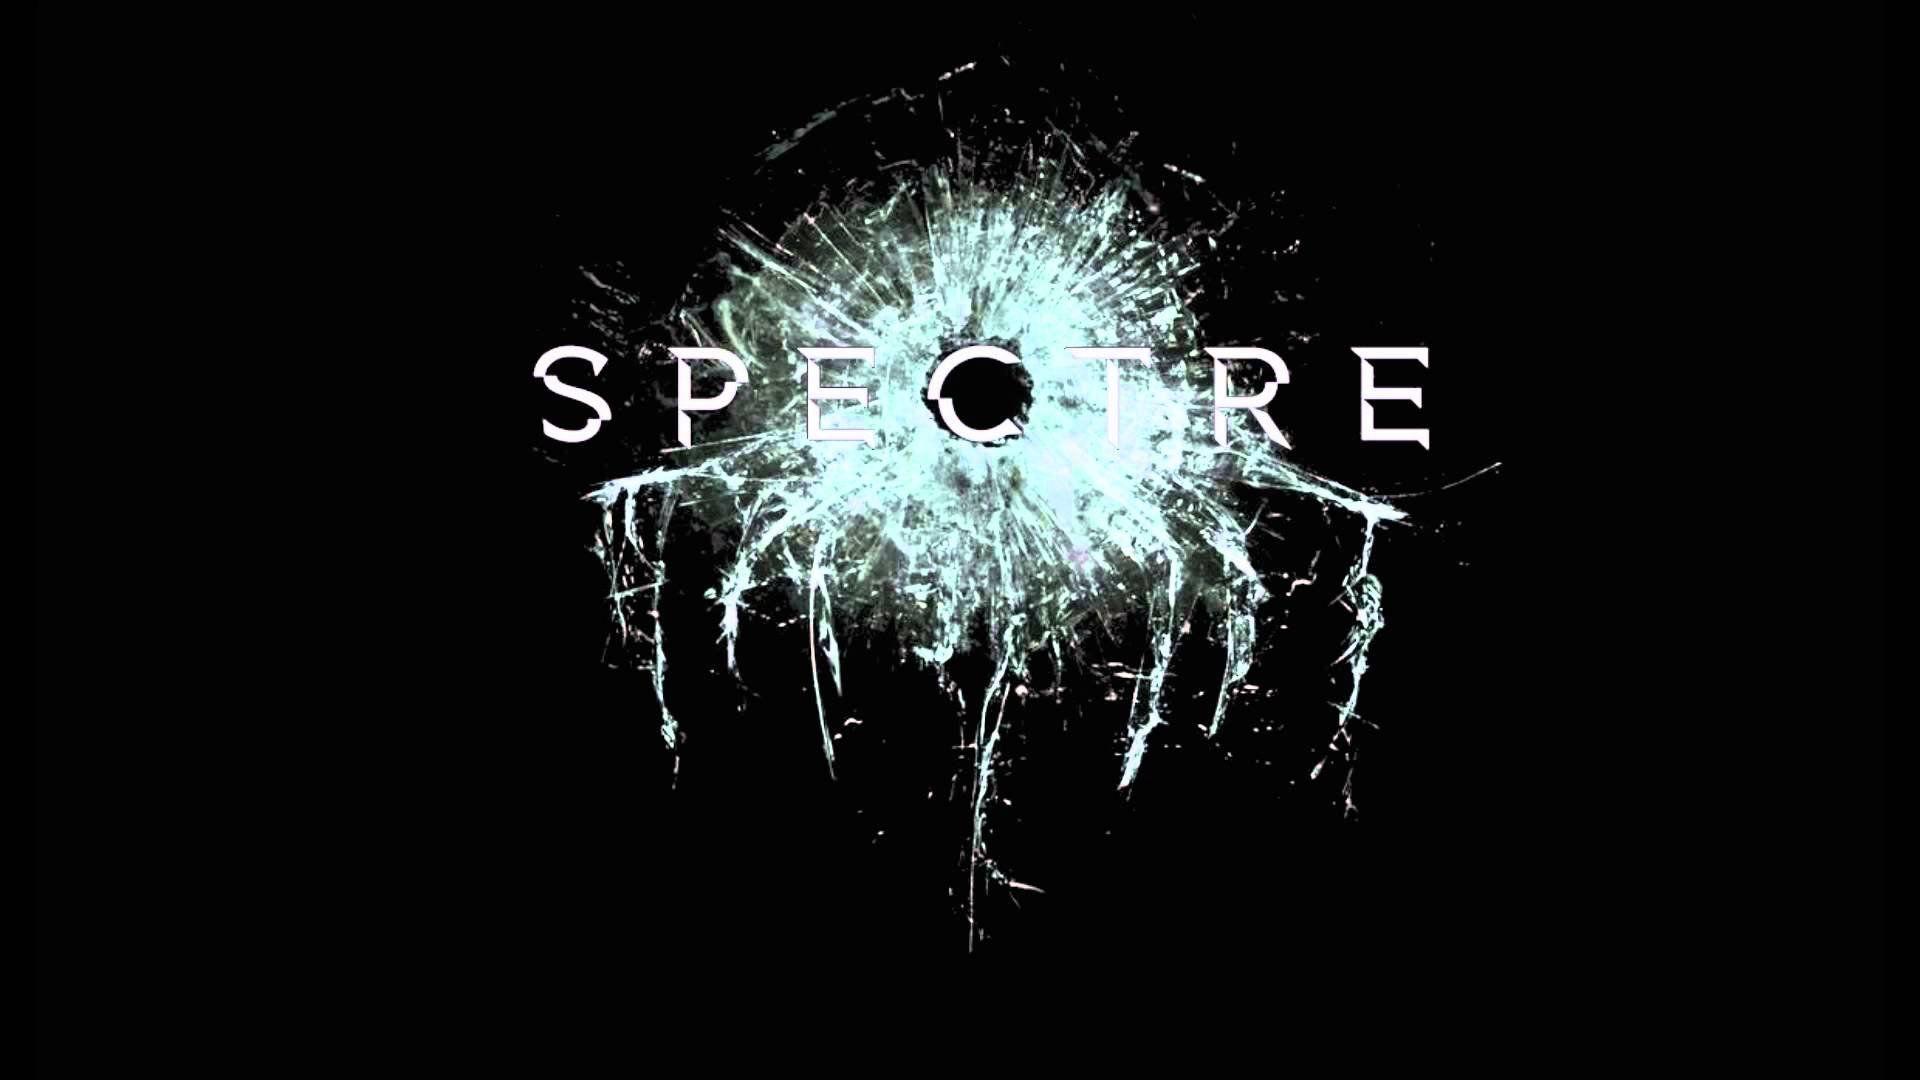 SPECTRE BOND 24 james action spy crime thriller mystery 1spectre